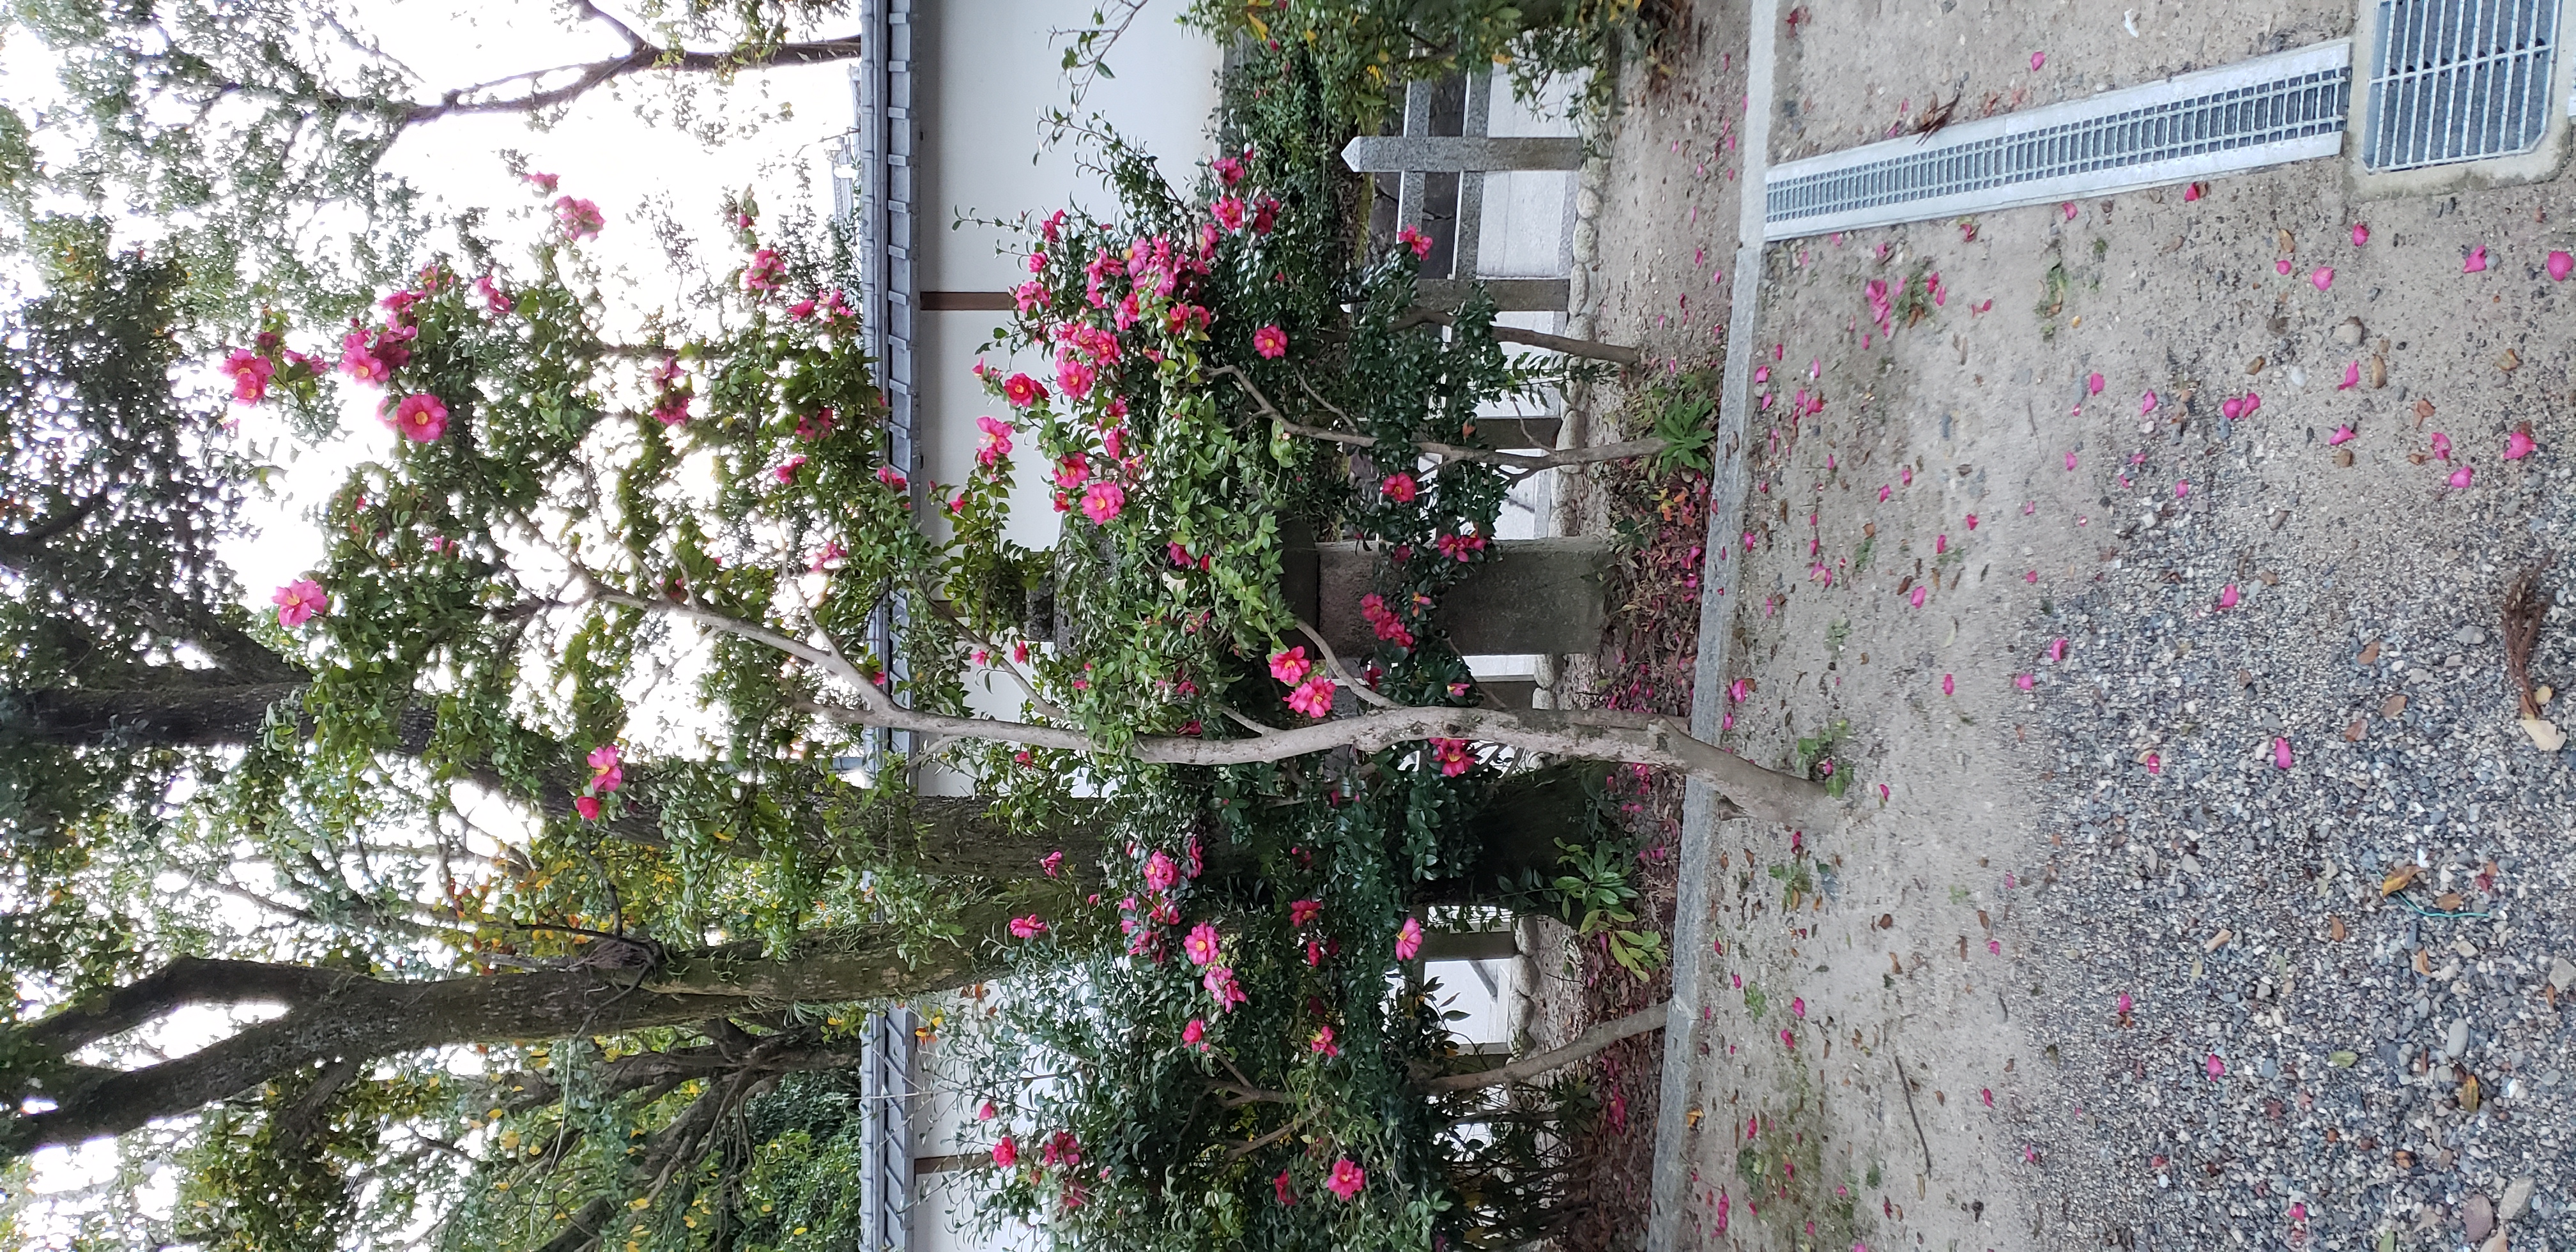 Camellia sasanqua plantplacesimage20181209_154549.jpg